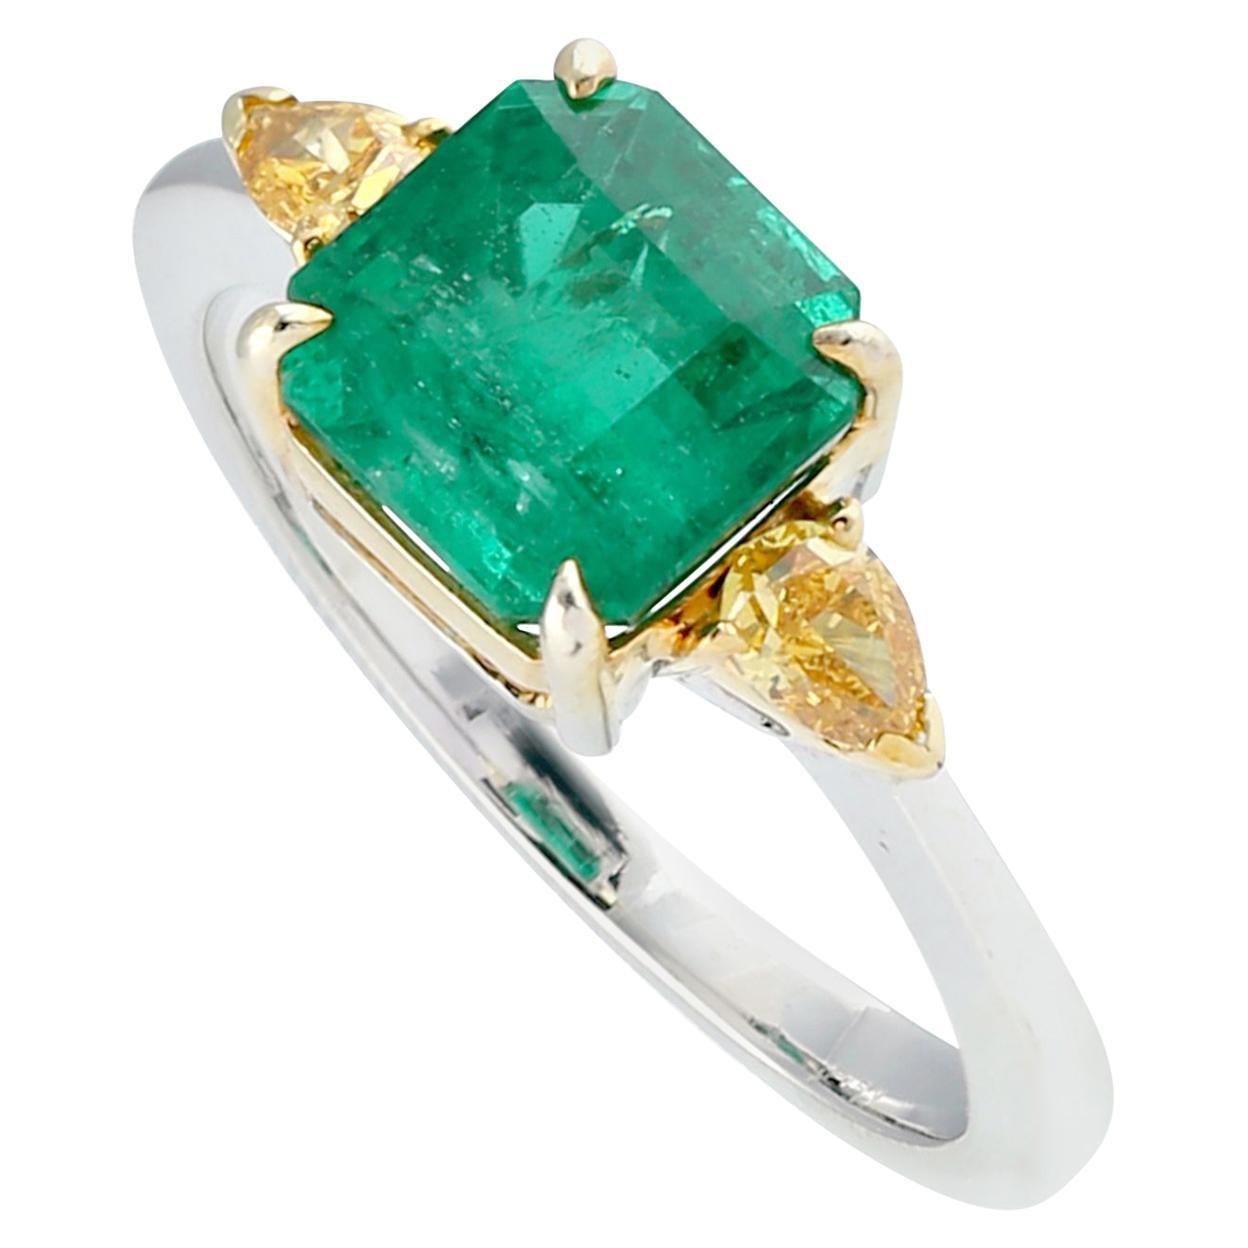 Princess Cut Emerald and Pear Shape Yellow Diamond Ring in 18 Karat Gold